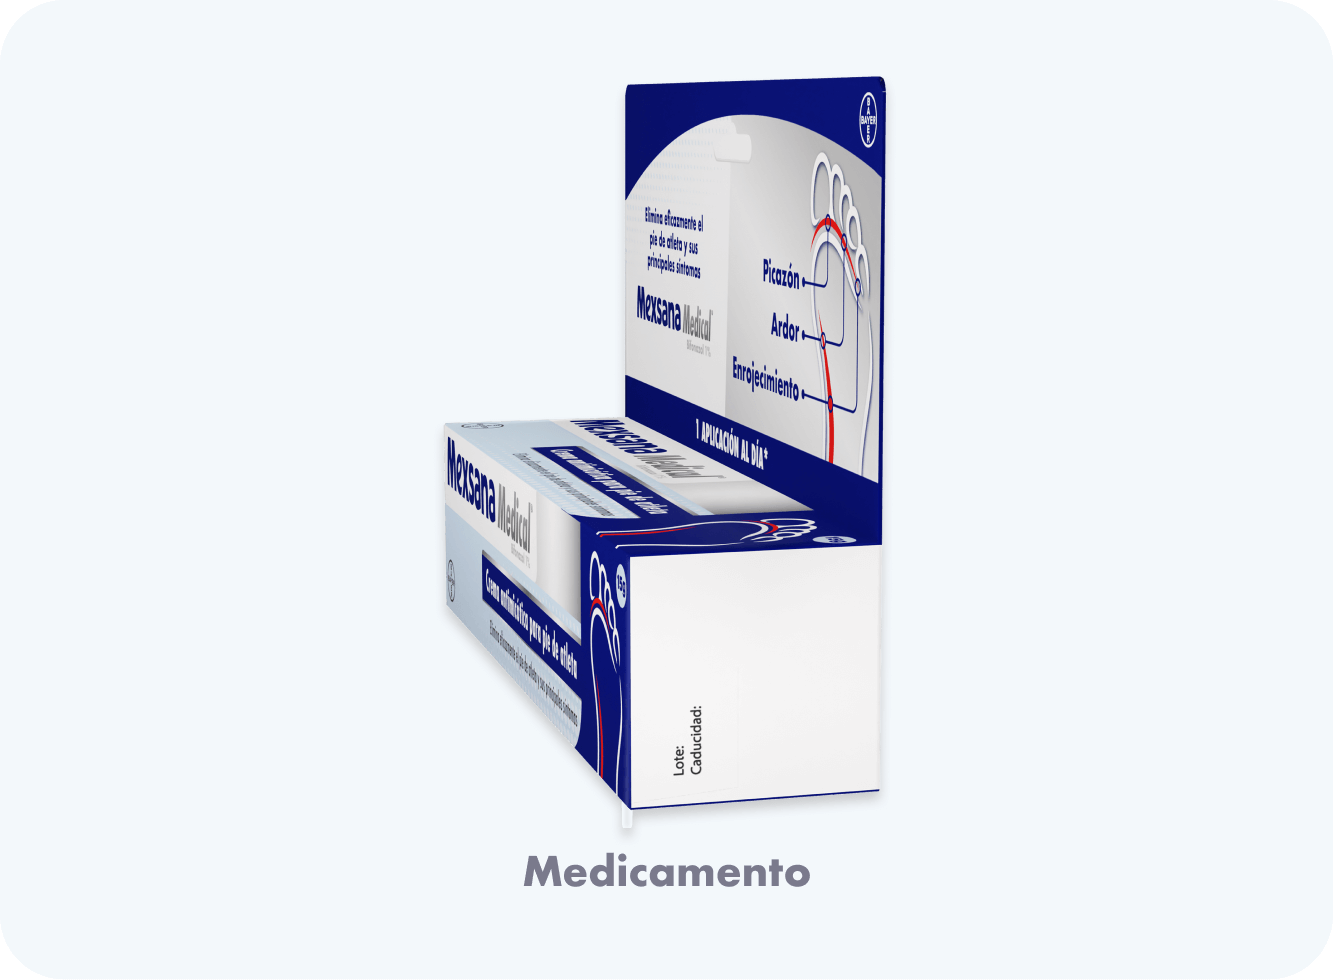 Mexsana® Medical